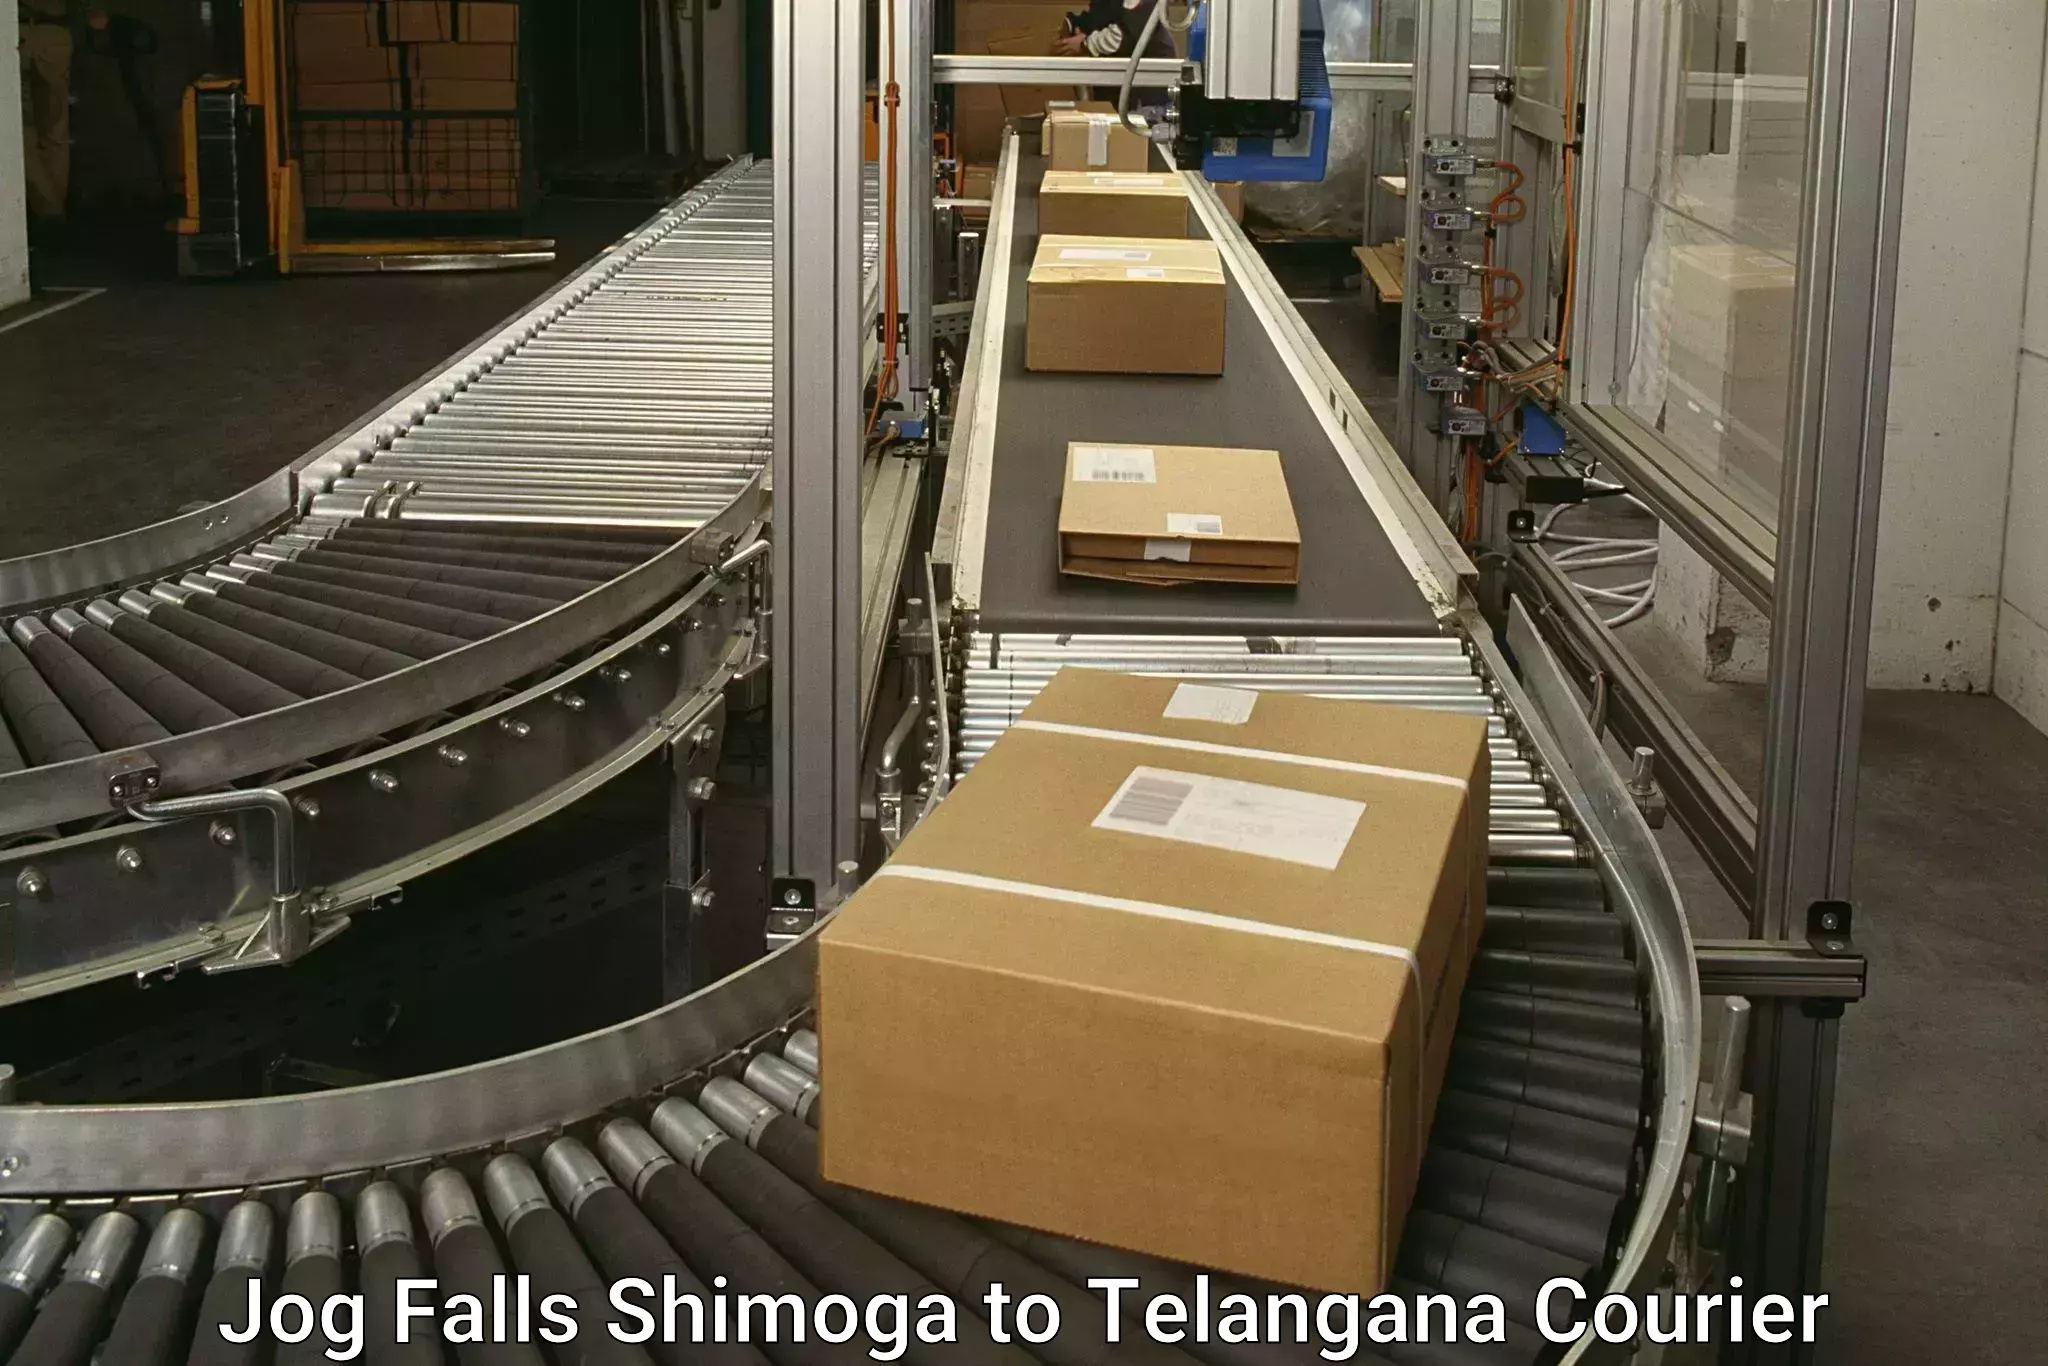 Courier service comparison in Jog Falls Shimoga to Tadvai